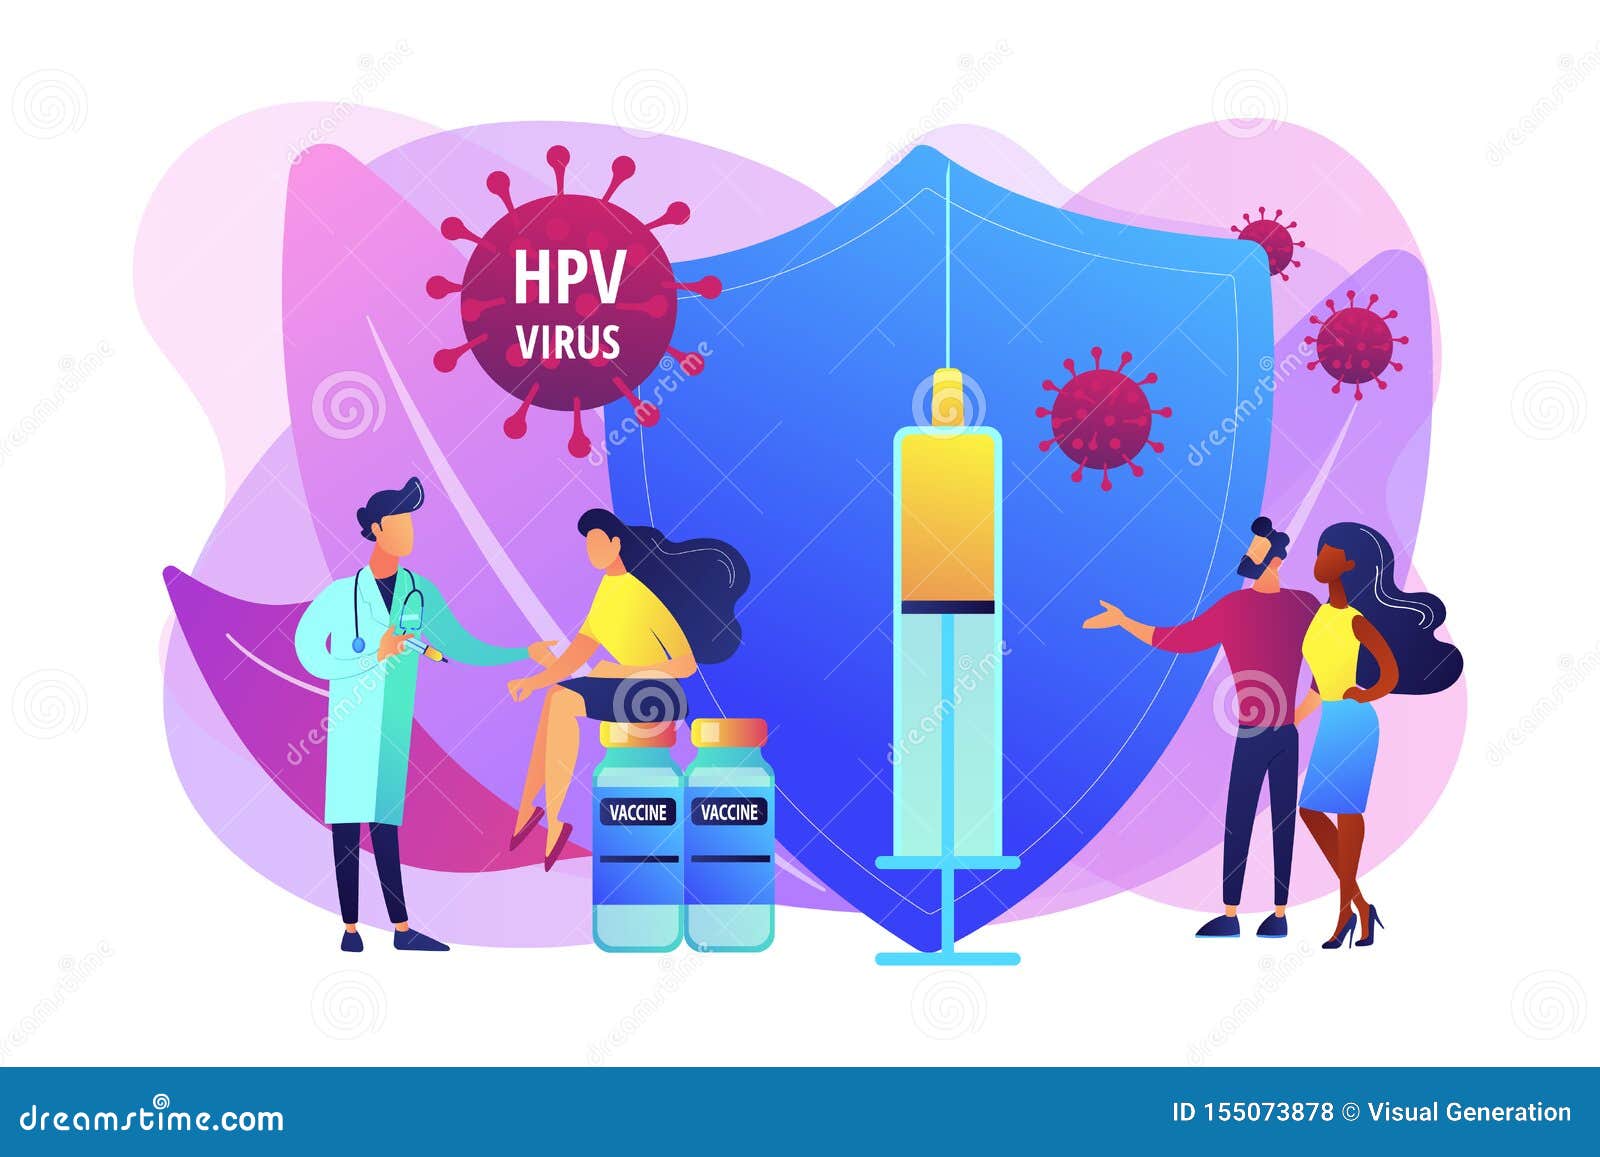 human papillomavirus prevention)